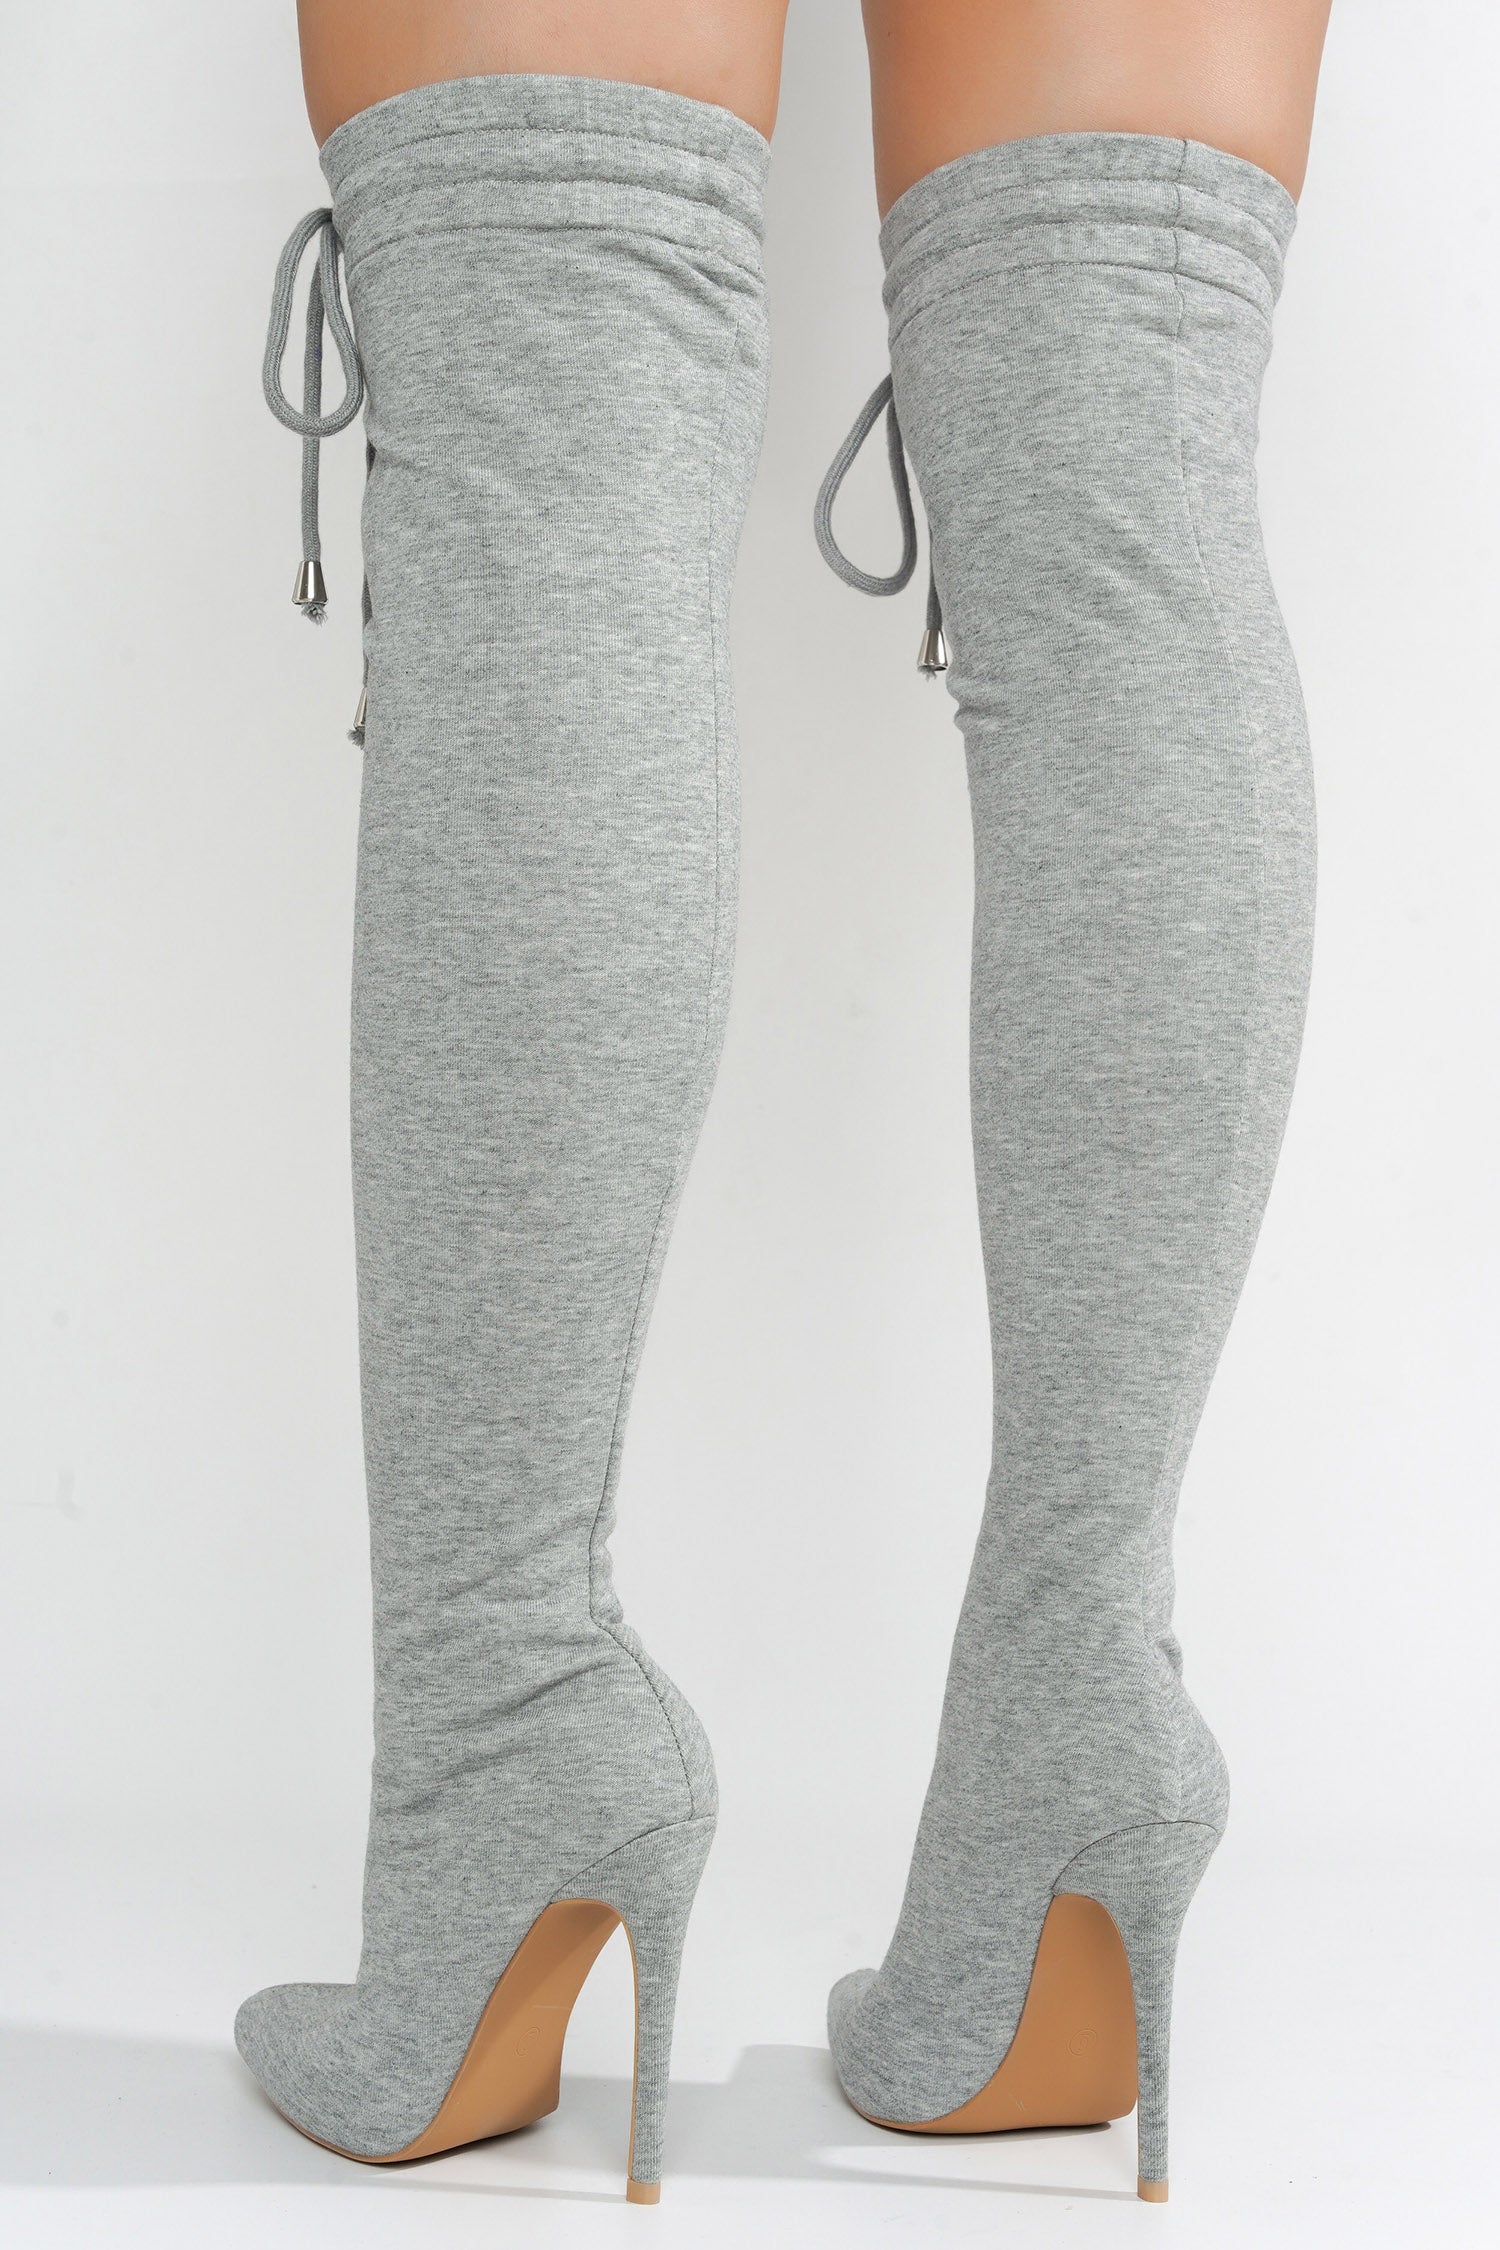 UrbanOG - Cahoka Over-the-Knee Stiletto Heel Boots - BOOTS